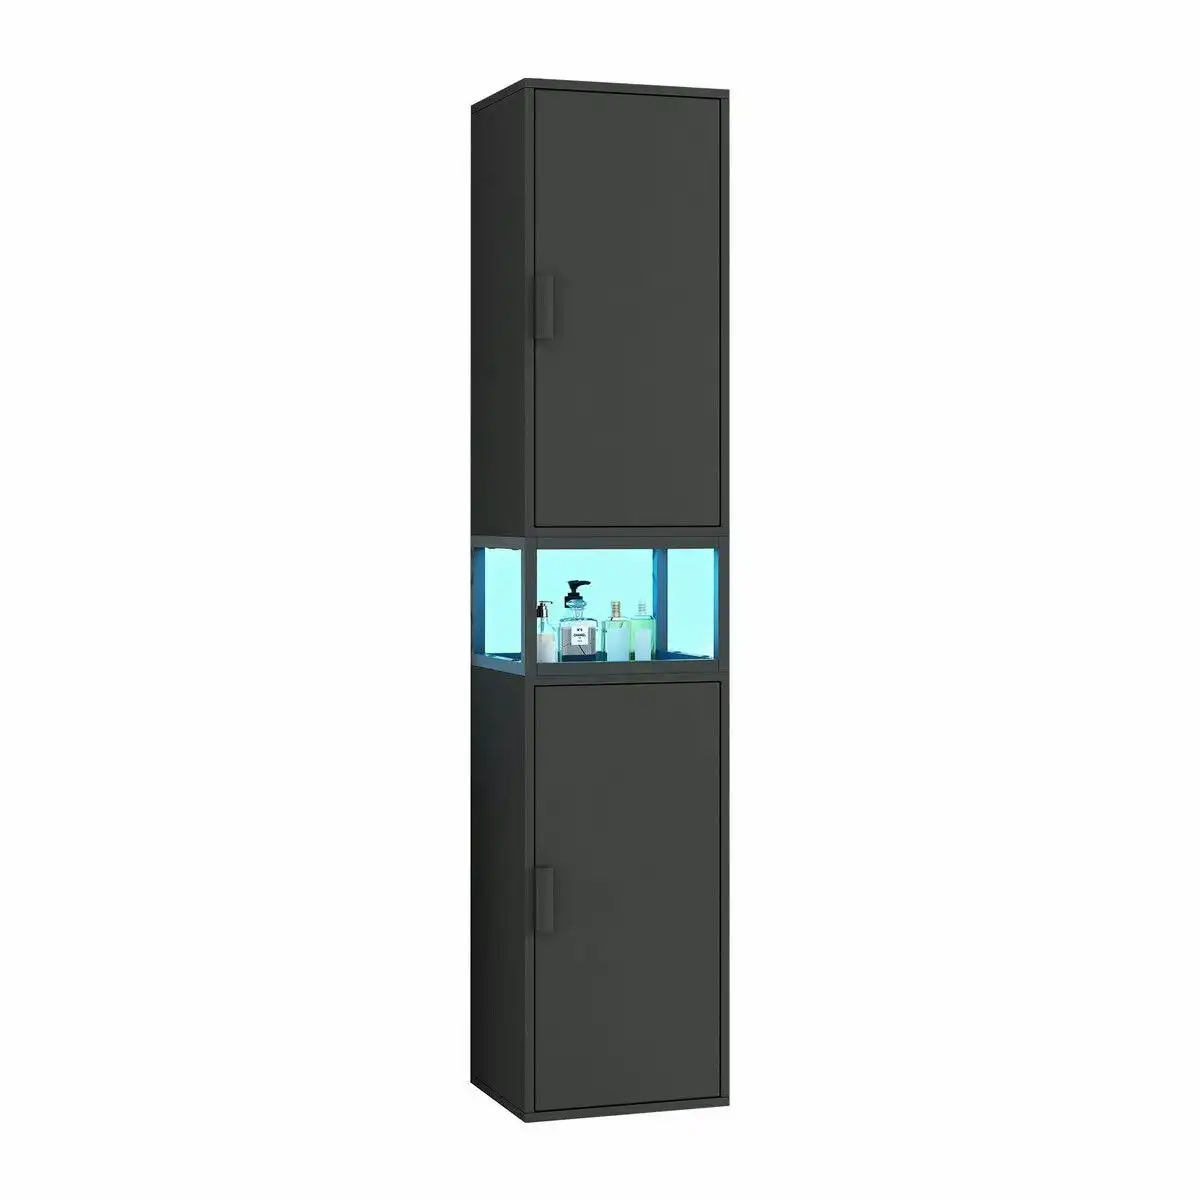 LUXSUITE Bathroom Storage Cabinet Medicine Shower Organiser Cupboard Shelves Corner Tall Narrow Floor Display Unit Tallboy 2 Doors LED Light Black